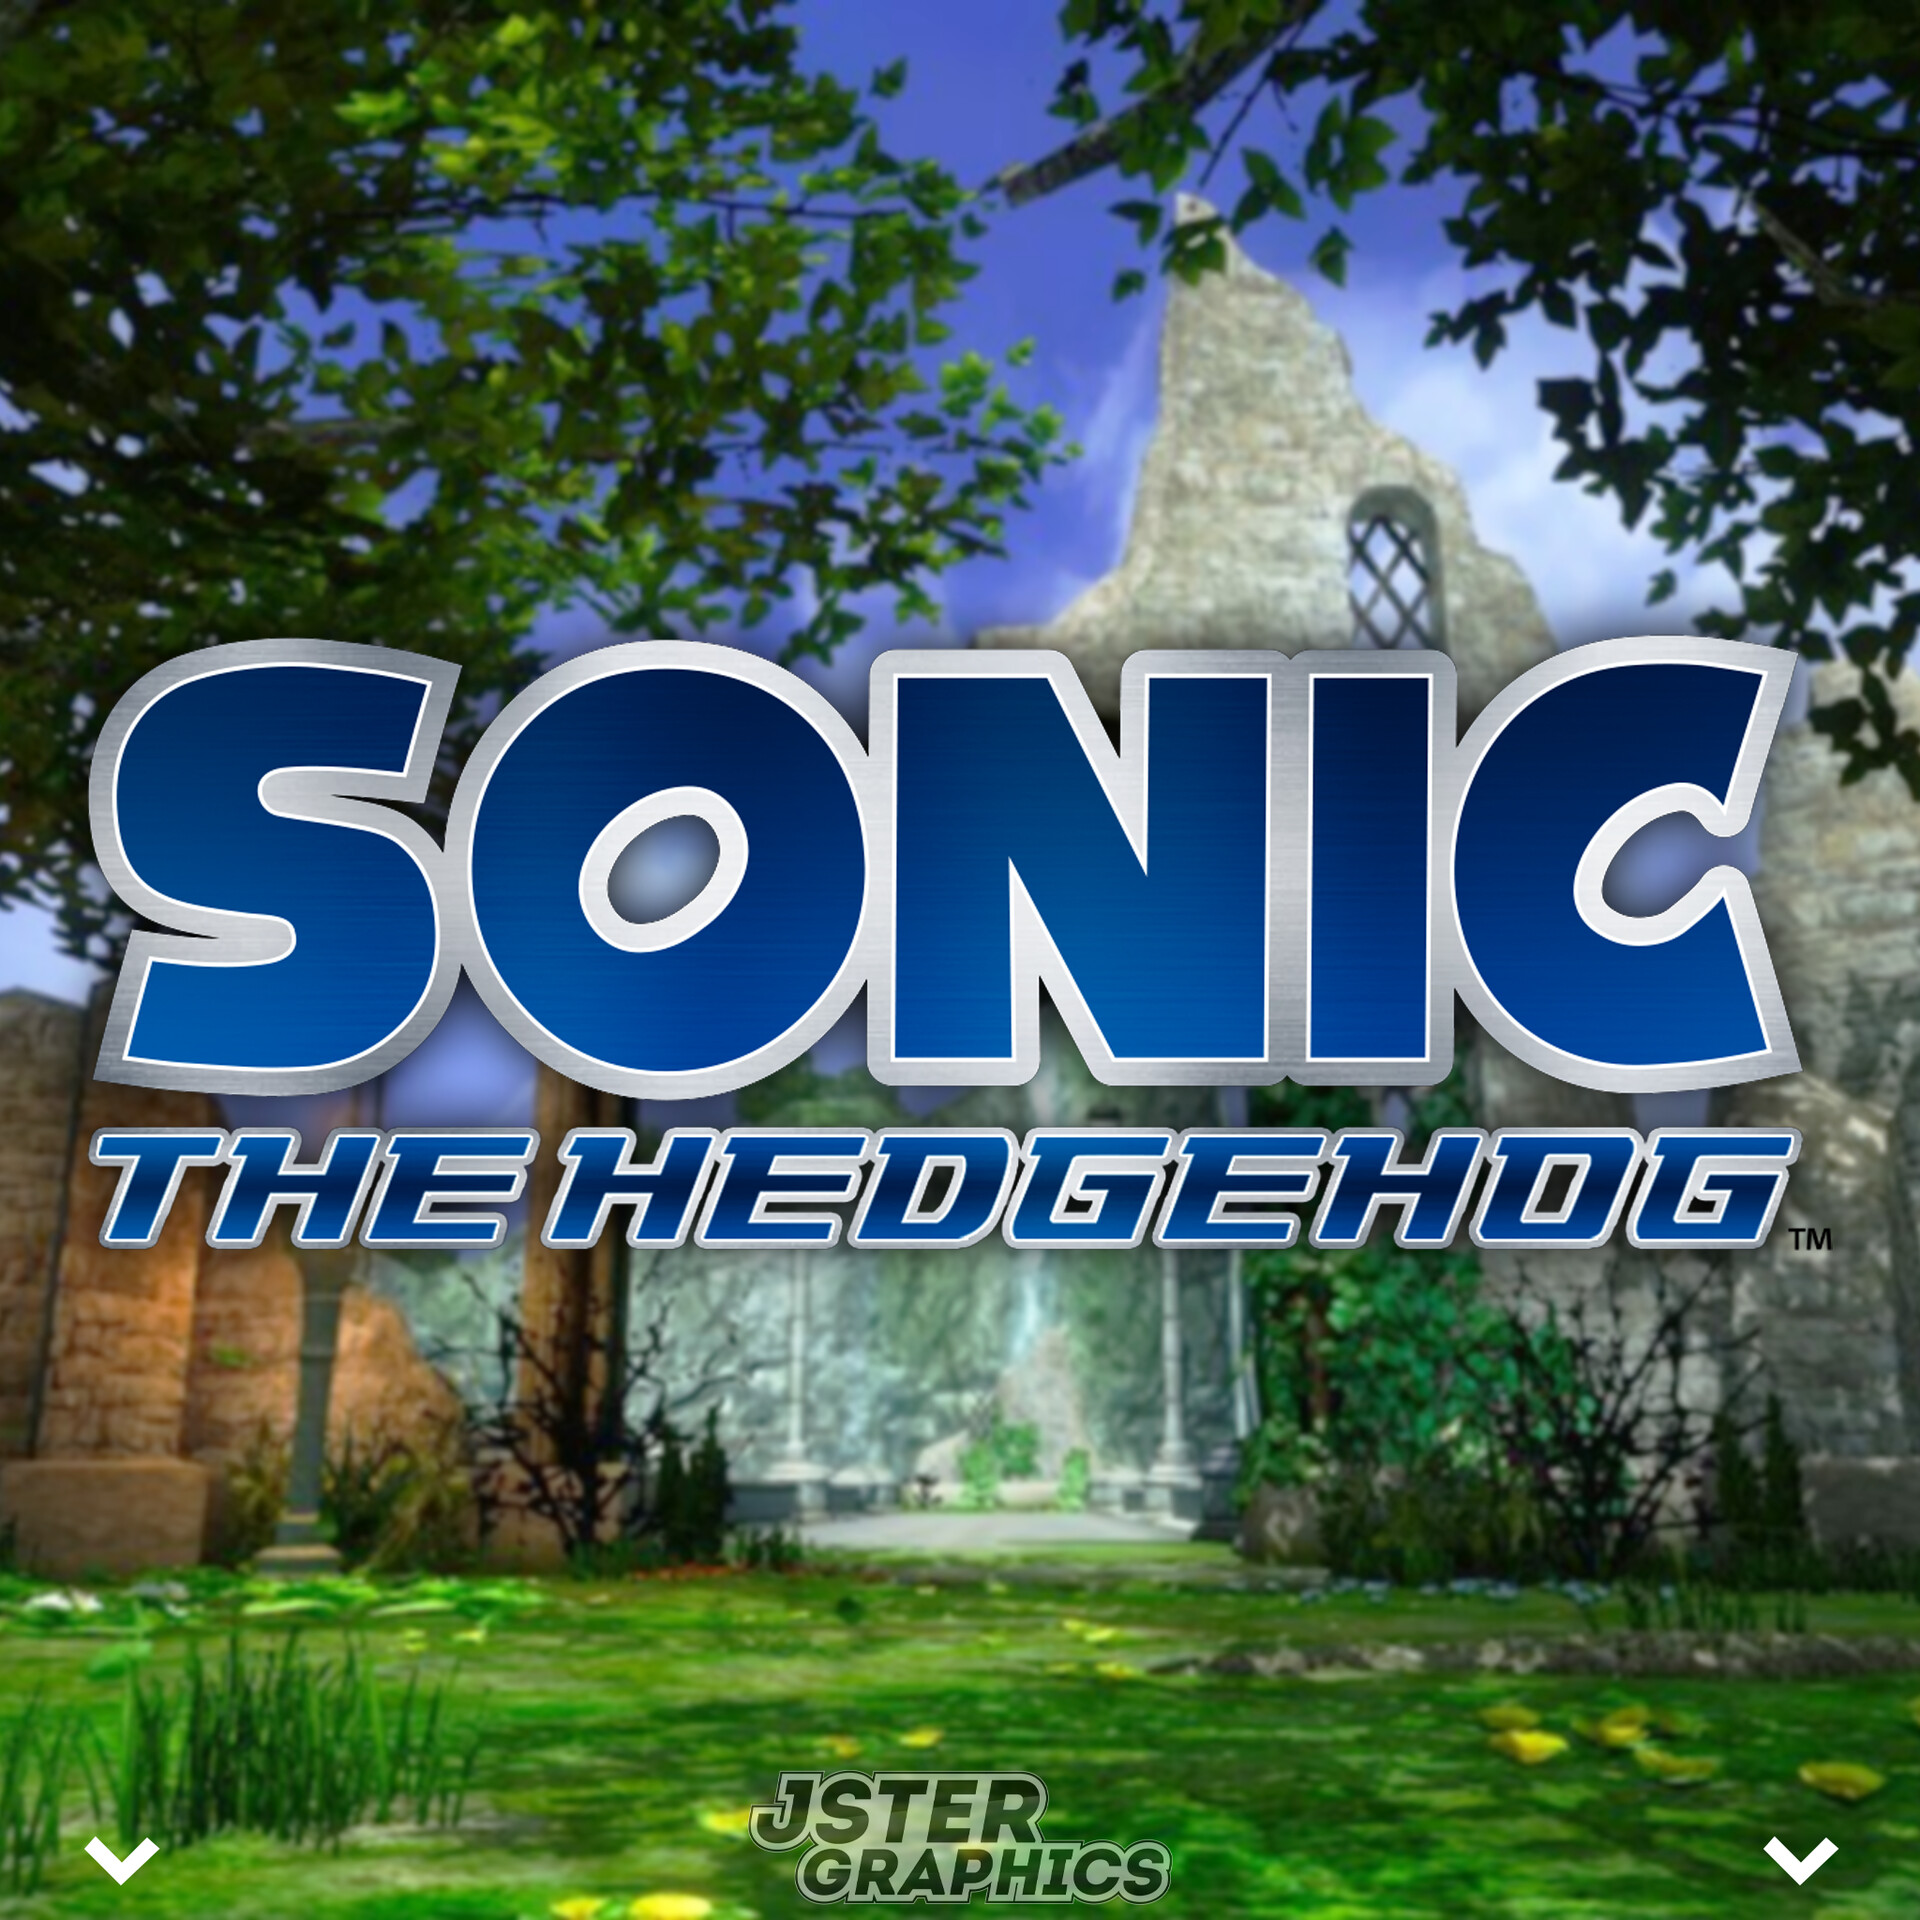 do u have any sonic the hedgehog graphics?